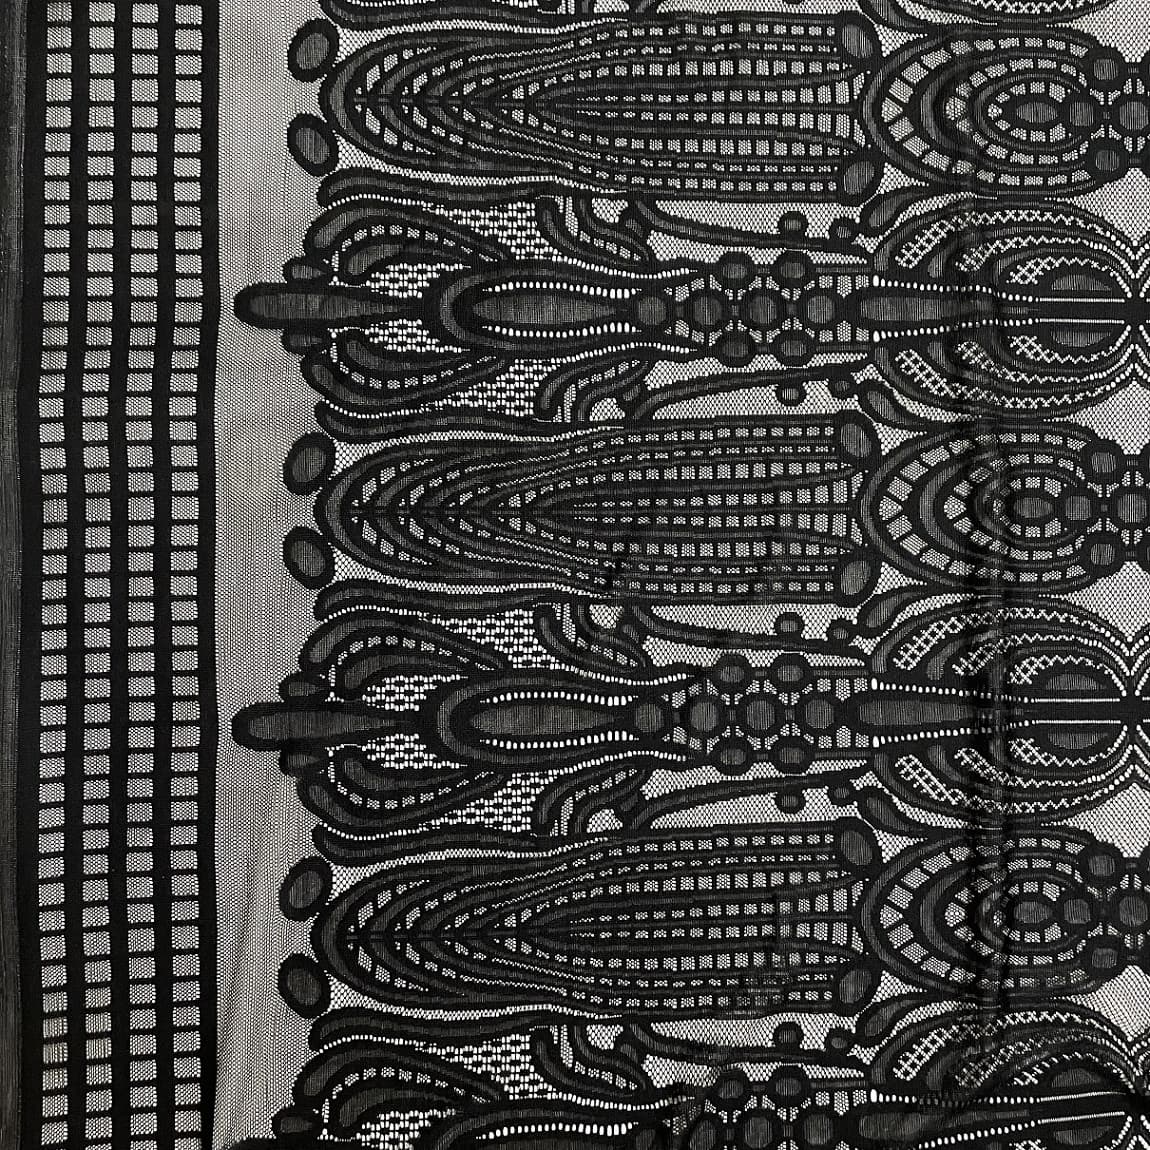 Korean nylon jacquard raschel lace fabric